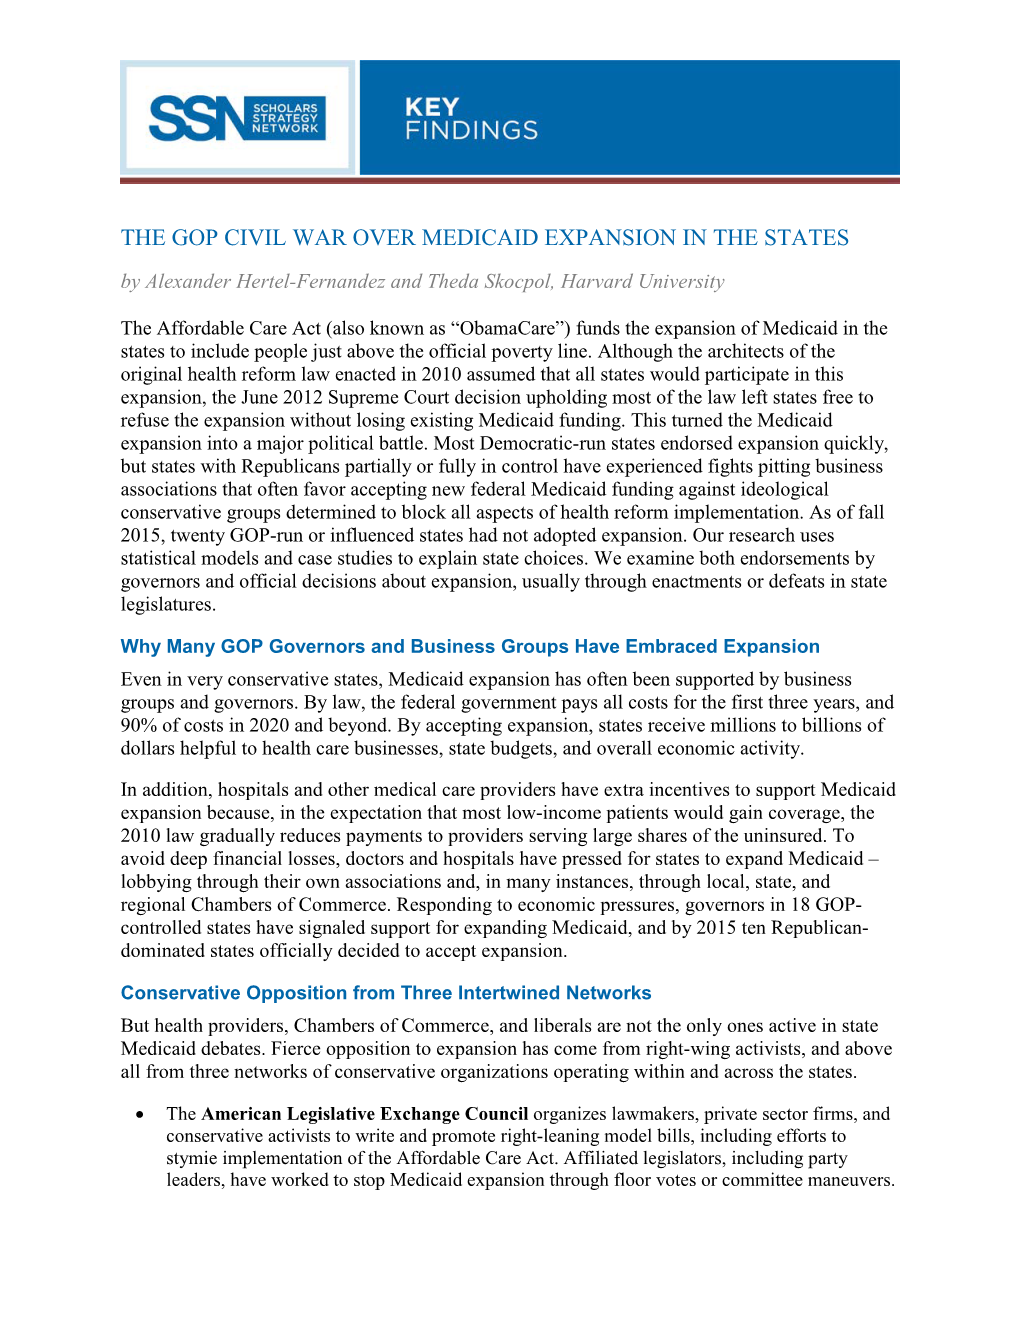 SSN Key Findings Hertel-Fernandez and Skocpol on the GOP Civil War Over Medicaid Expansion